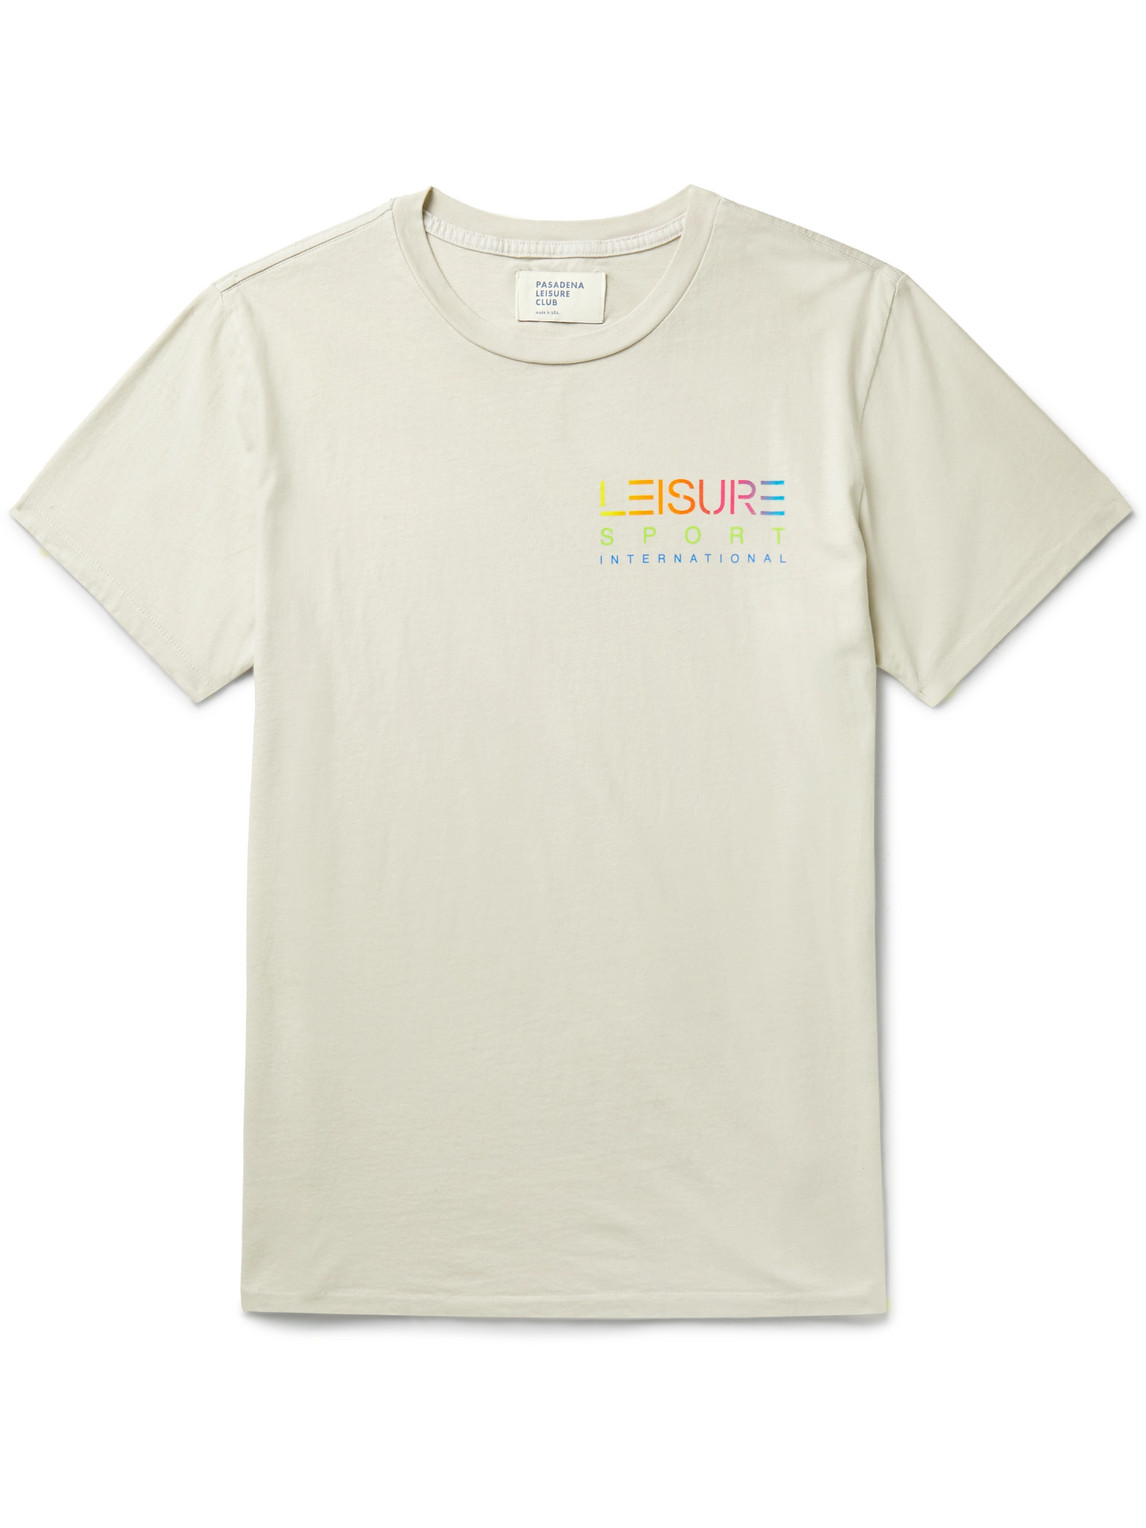 Pasadena Leisure Club International Printed Cotton-jersey T-shirt In Gray